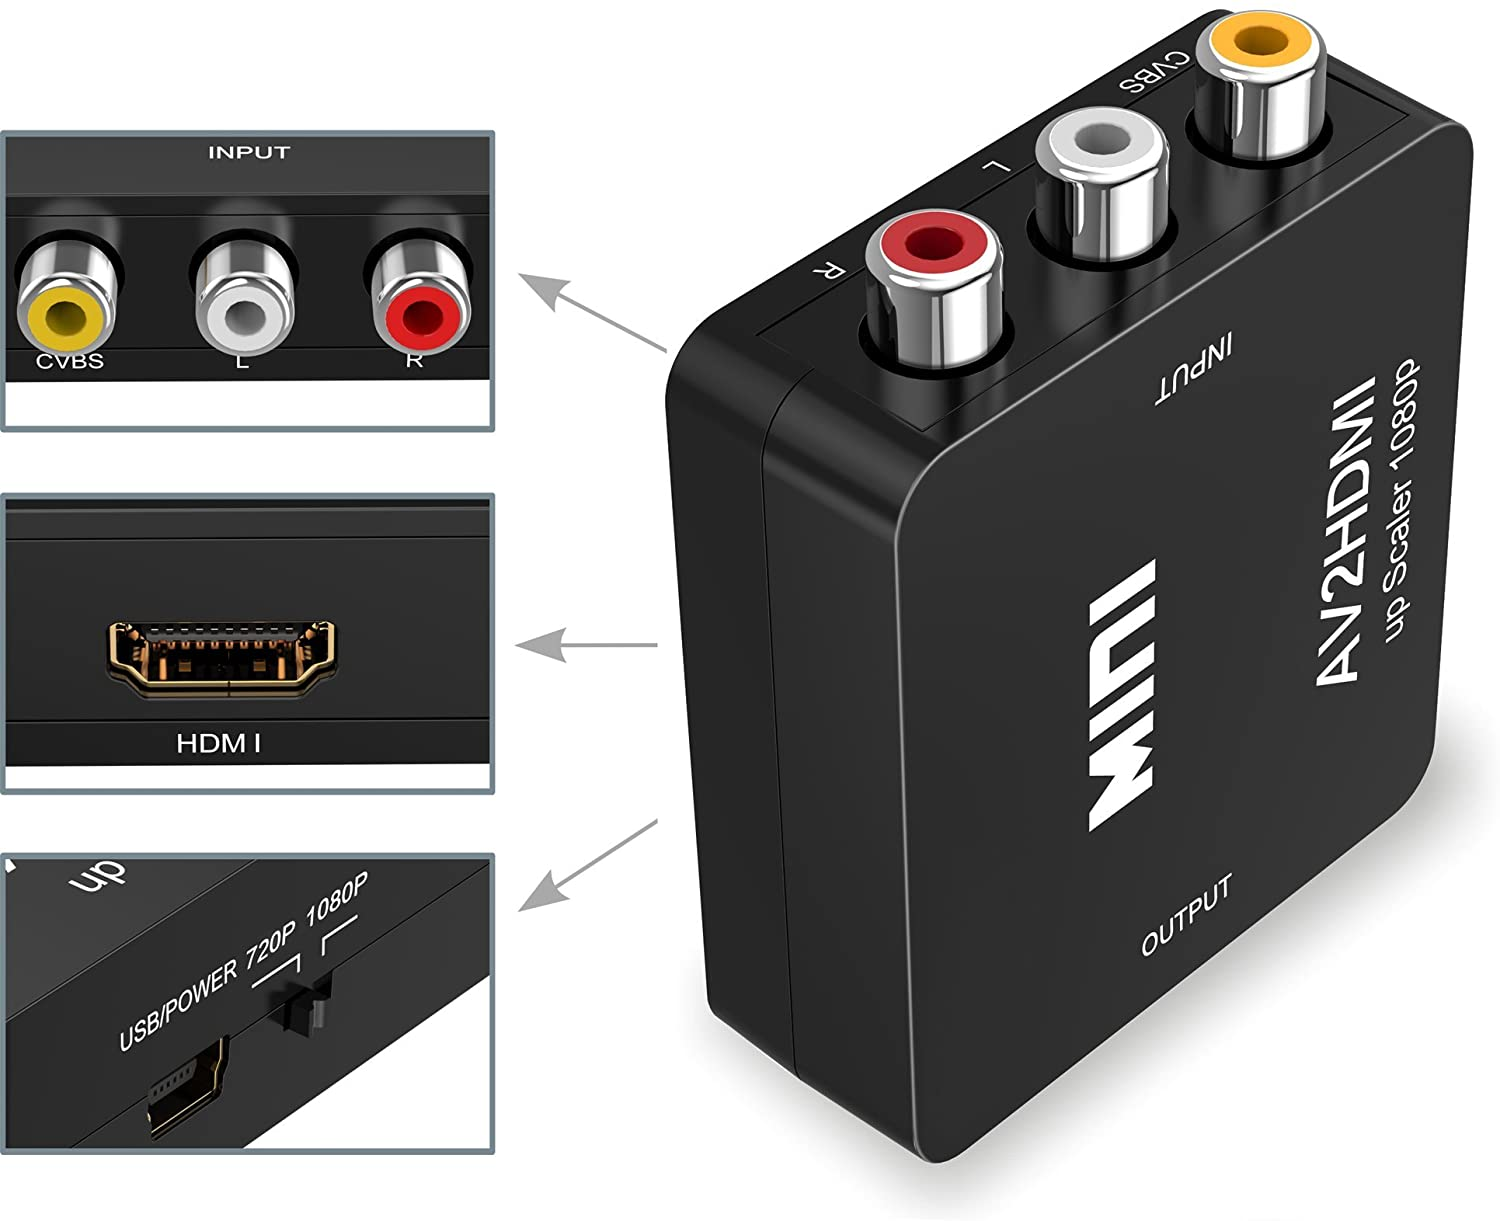 Mini-Composite-AV-CVBS-Video-Adapter-720p-1080p-RCA-to-HDMI-Converter-1759725